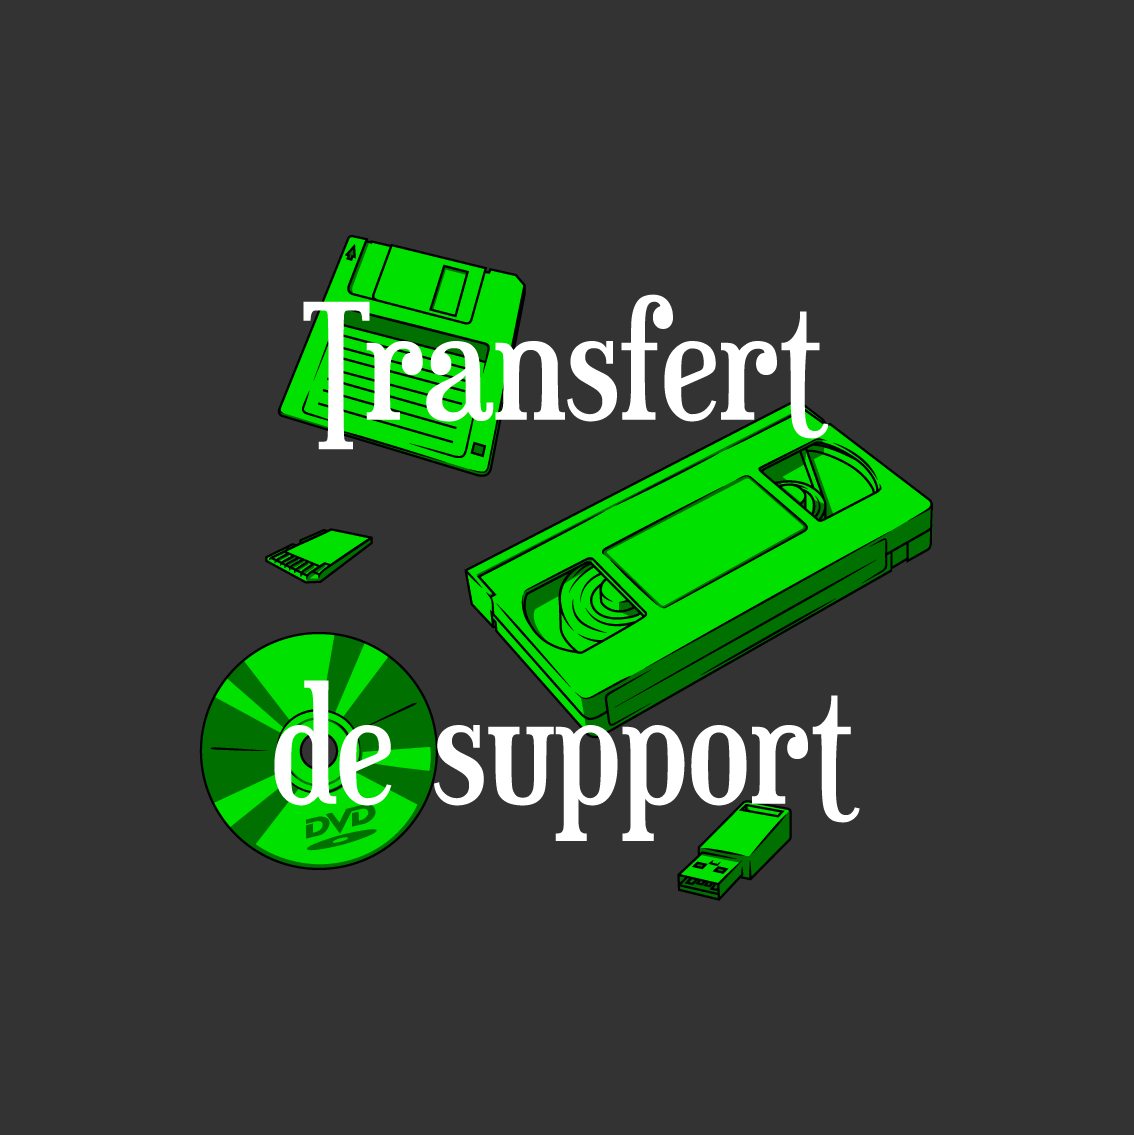 Transfert de support - Illustration et texte